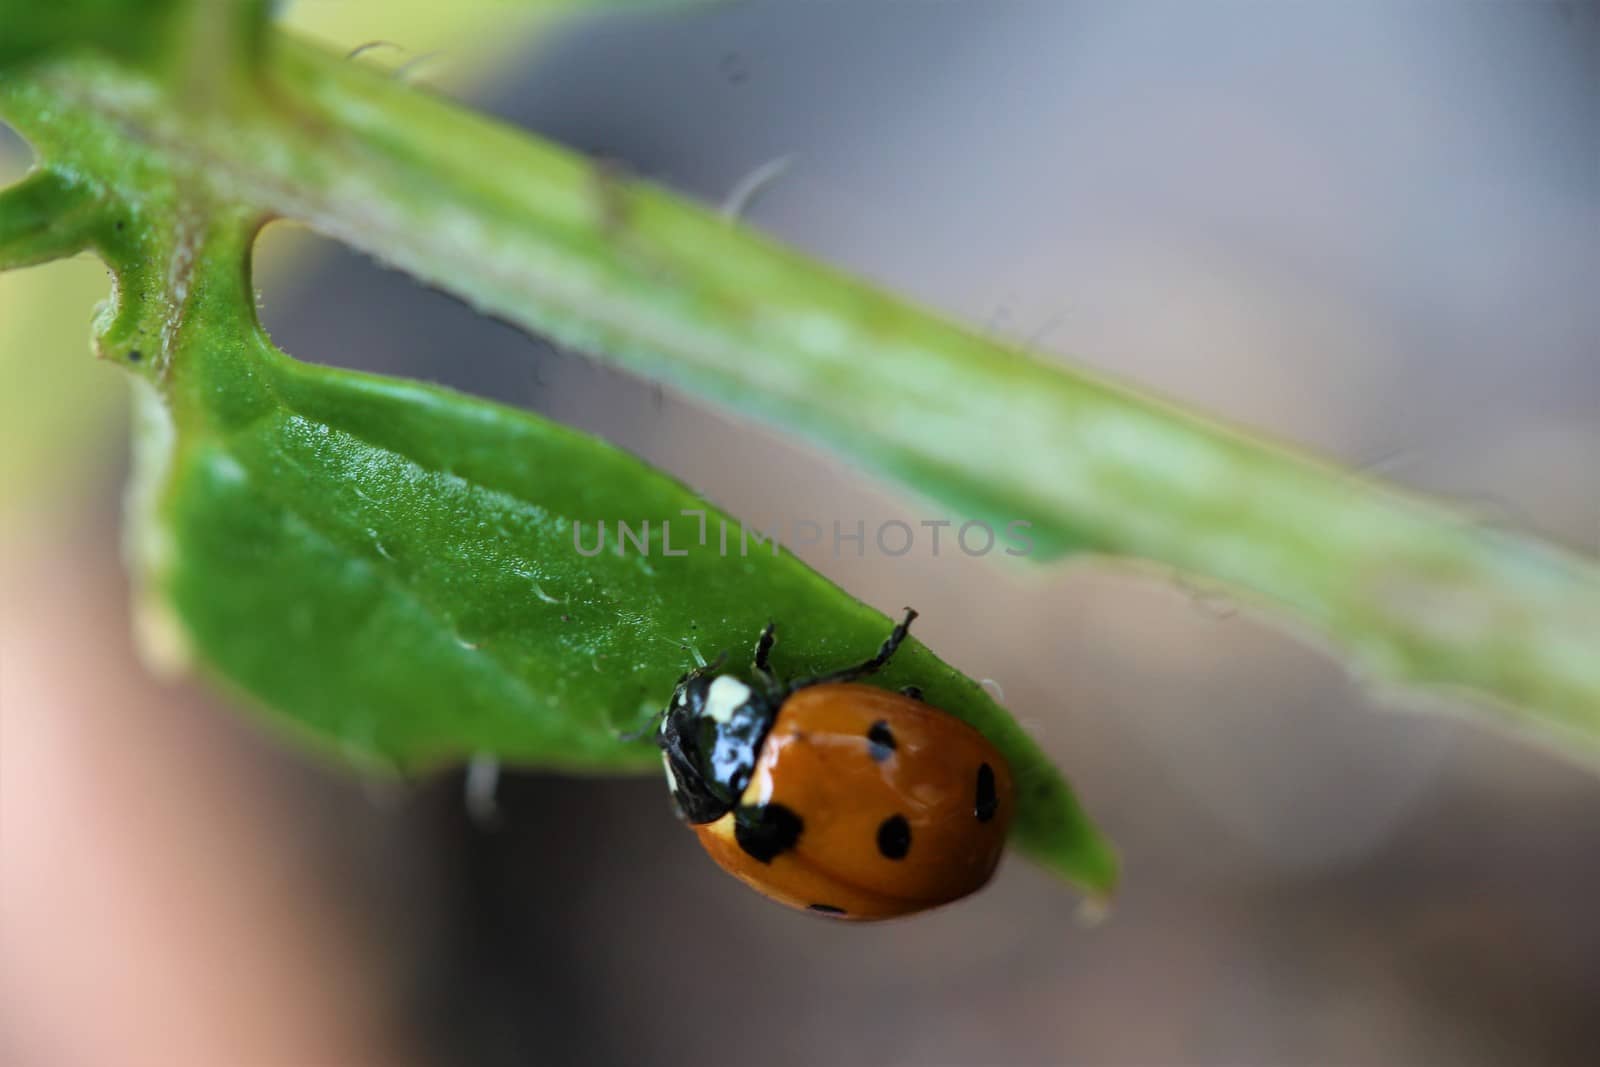 A ladybug as a close-up on a green plant